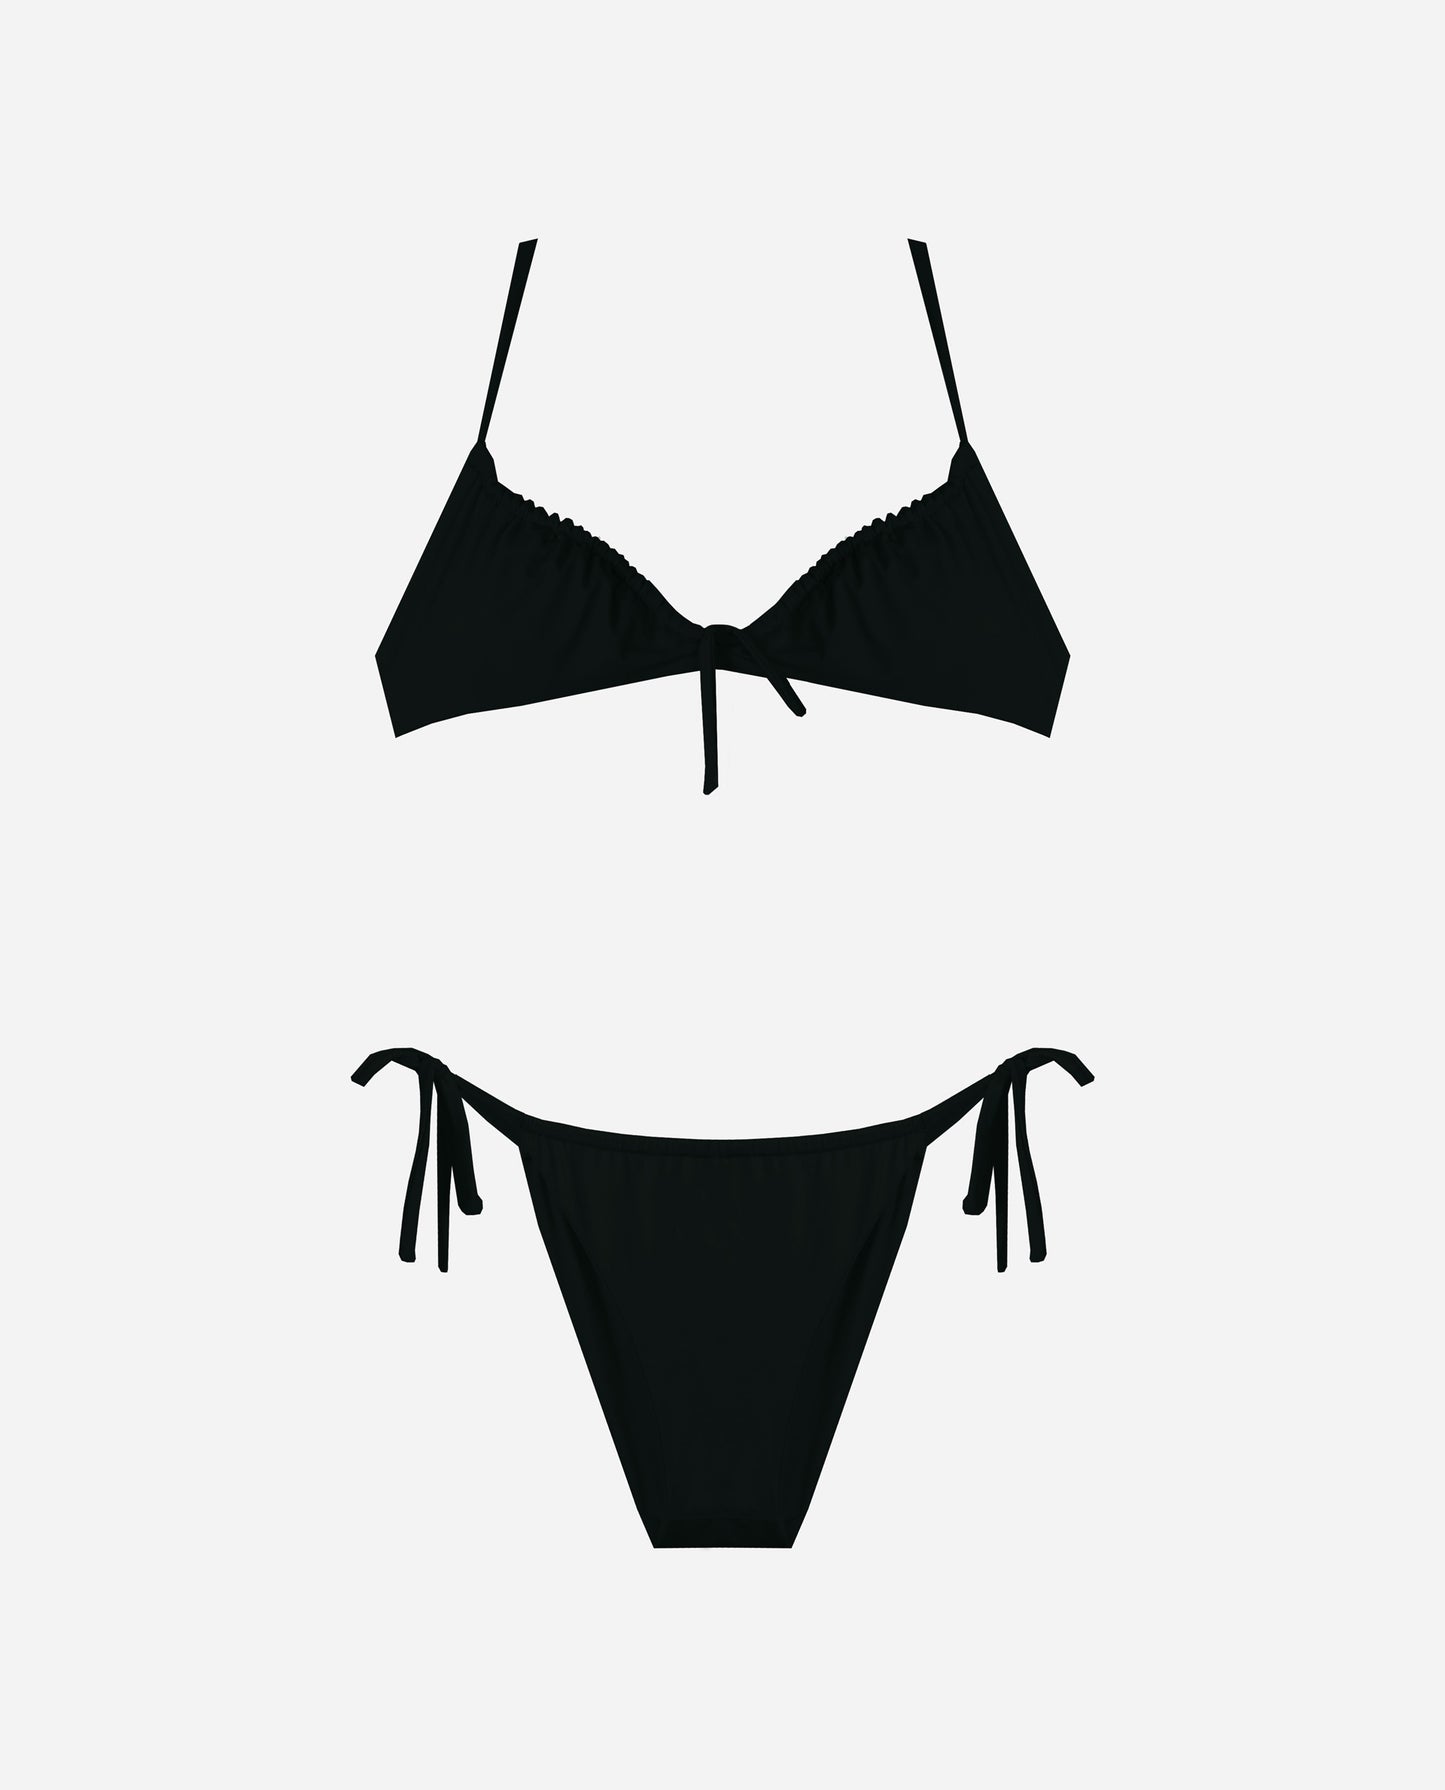 BIKINI MORE SUN | Bikini Negro Frunces Braga Brasileña | Bikinis Bañadores 2021 THE-ARE